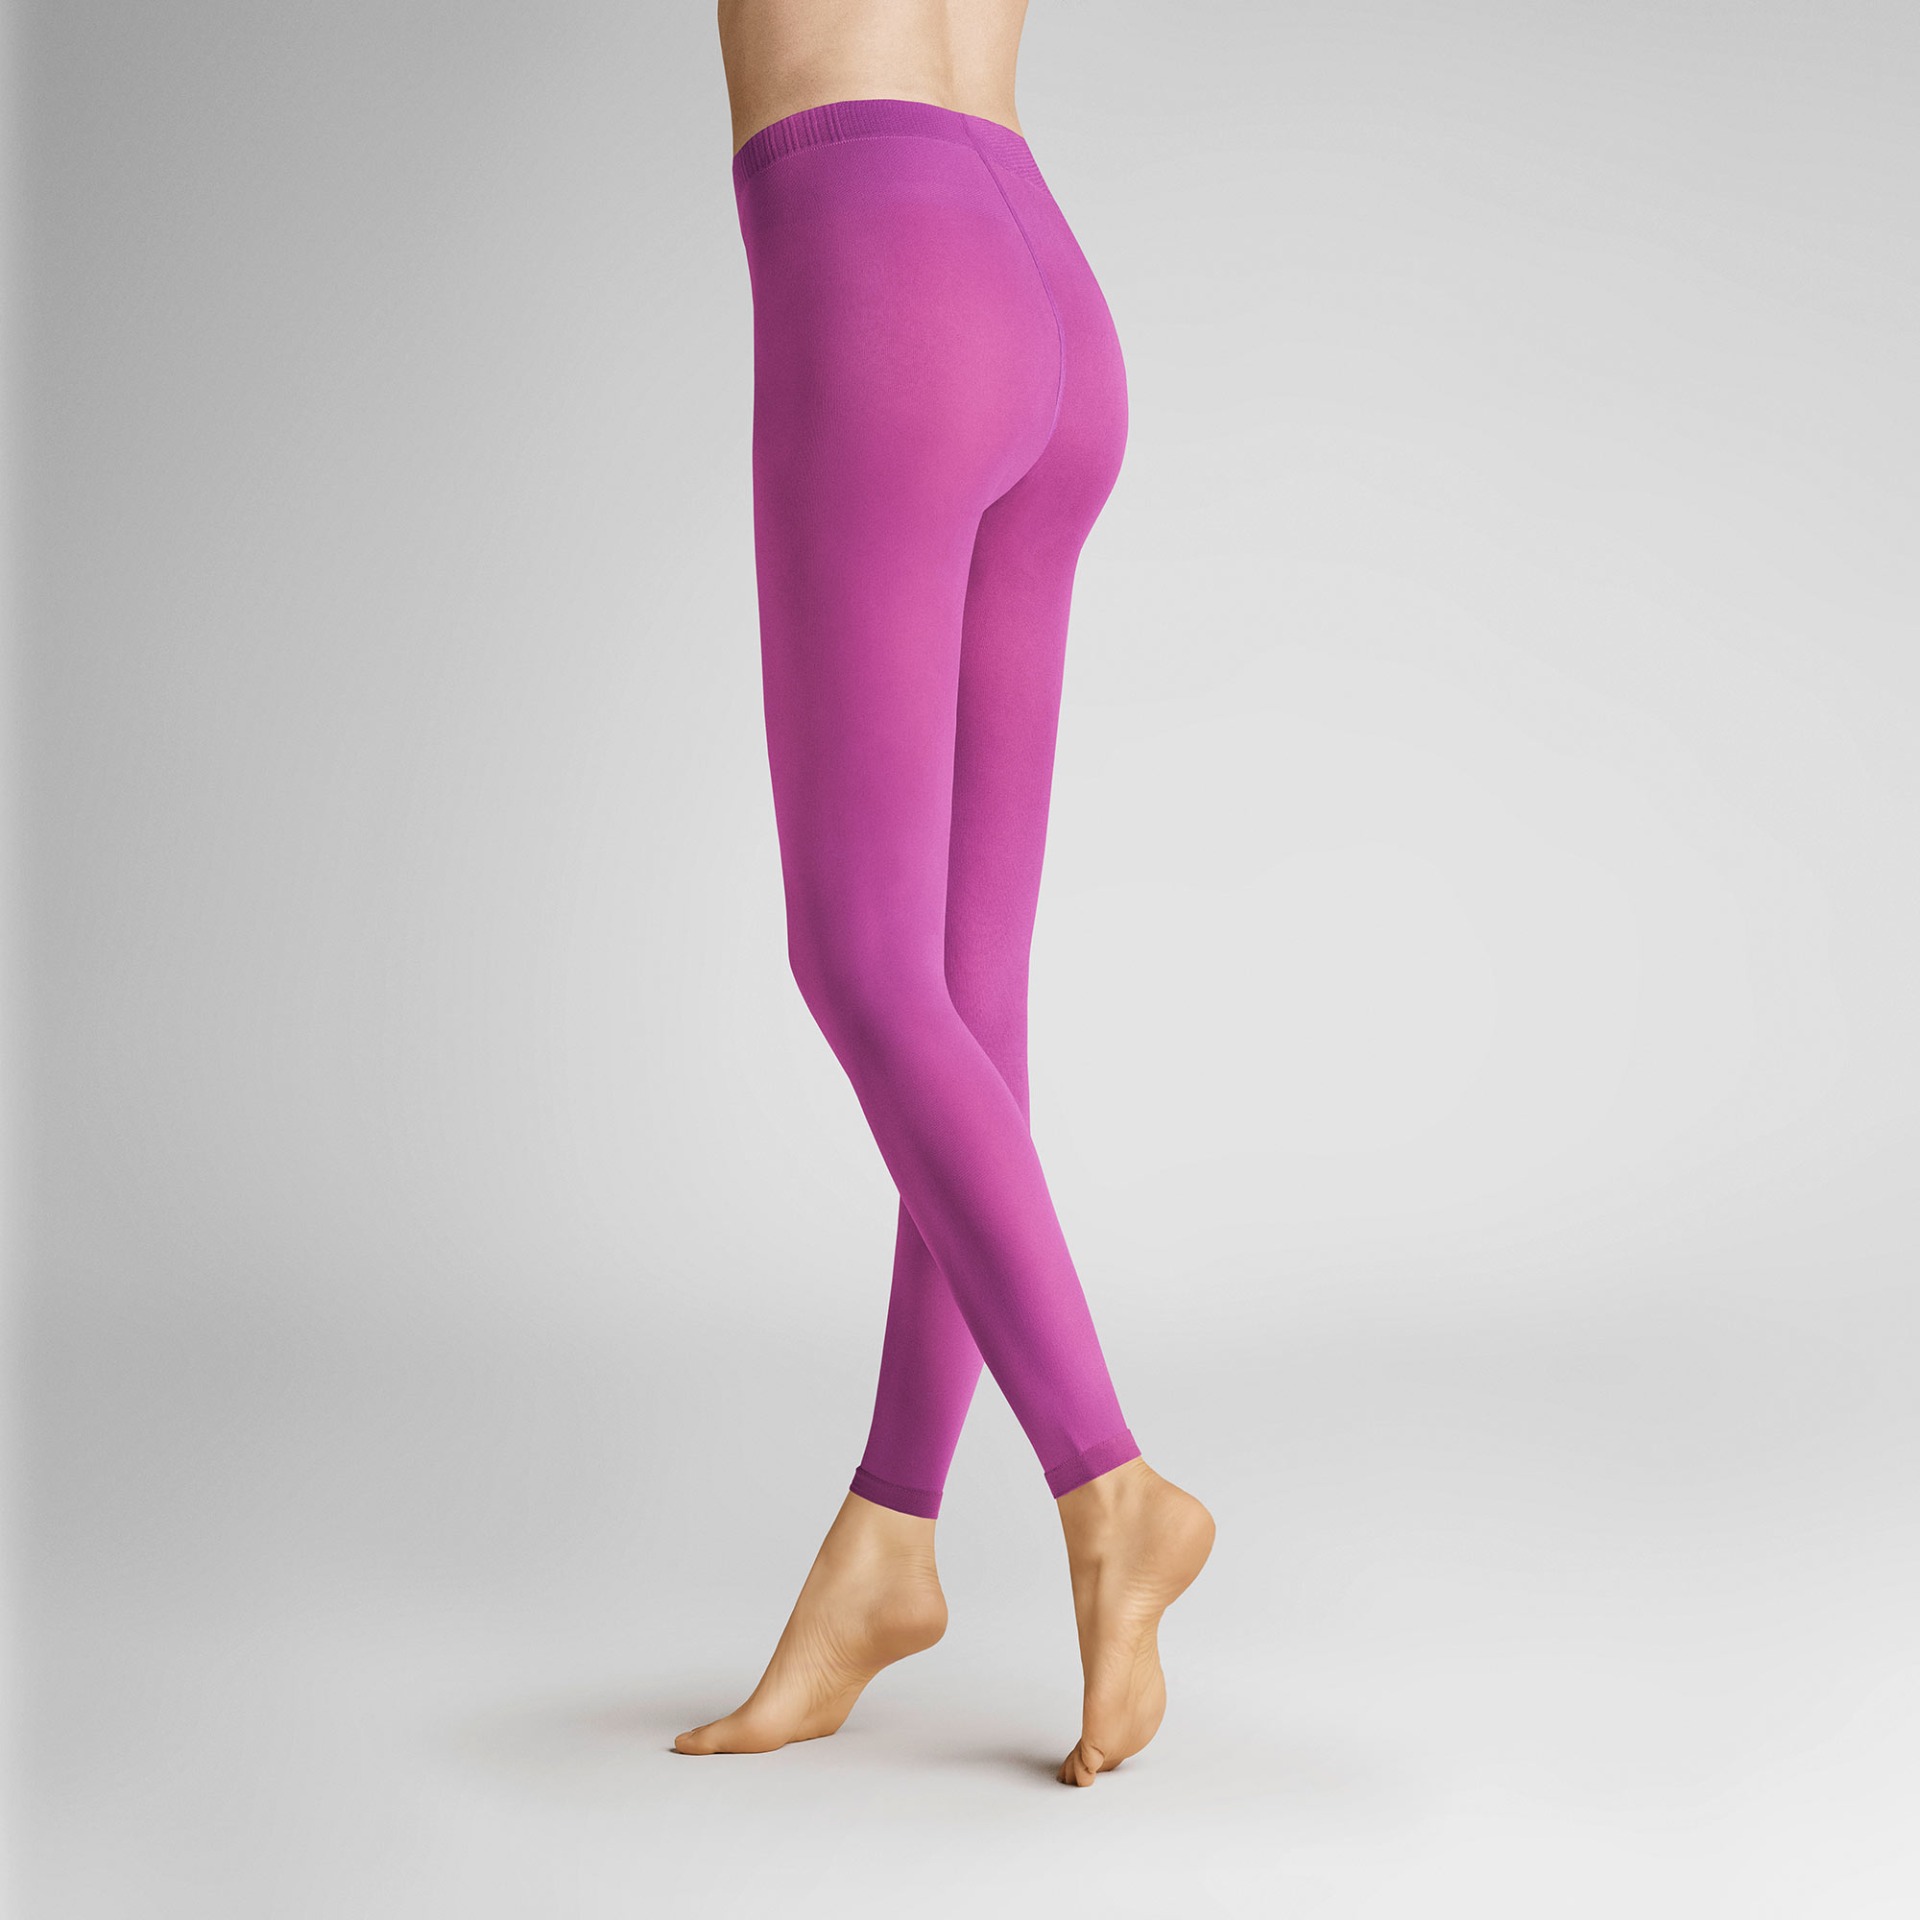 HUDSON Damen MICRO 50 -  44/46 - Semi-blickdichte Leggings mit ebenmäßiger Optik - Fuxia 0103 (Pink/Violett)